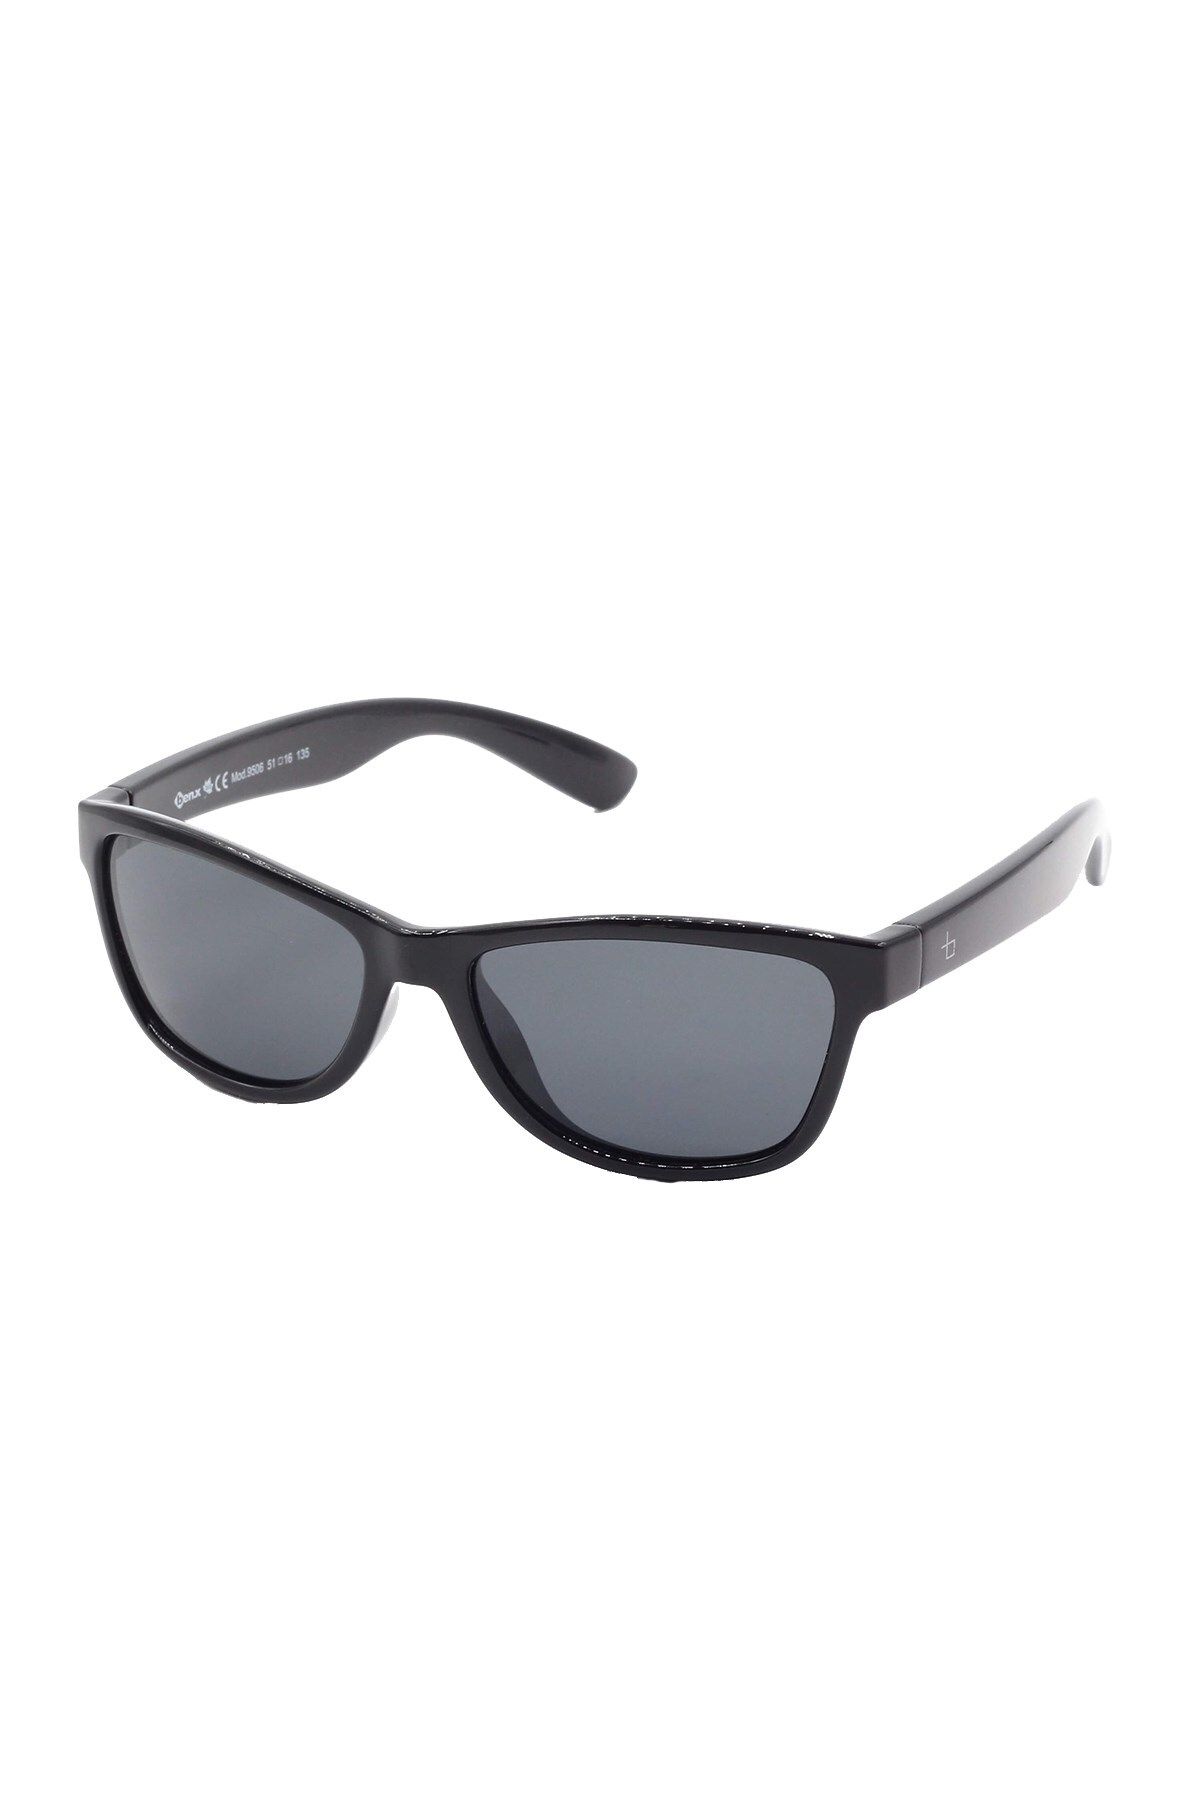 Benx Sunglasses Benx Bxs 9506-06 Çocuk Güneş Gözlüğü